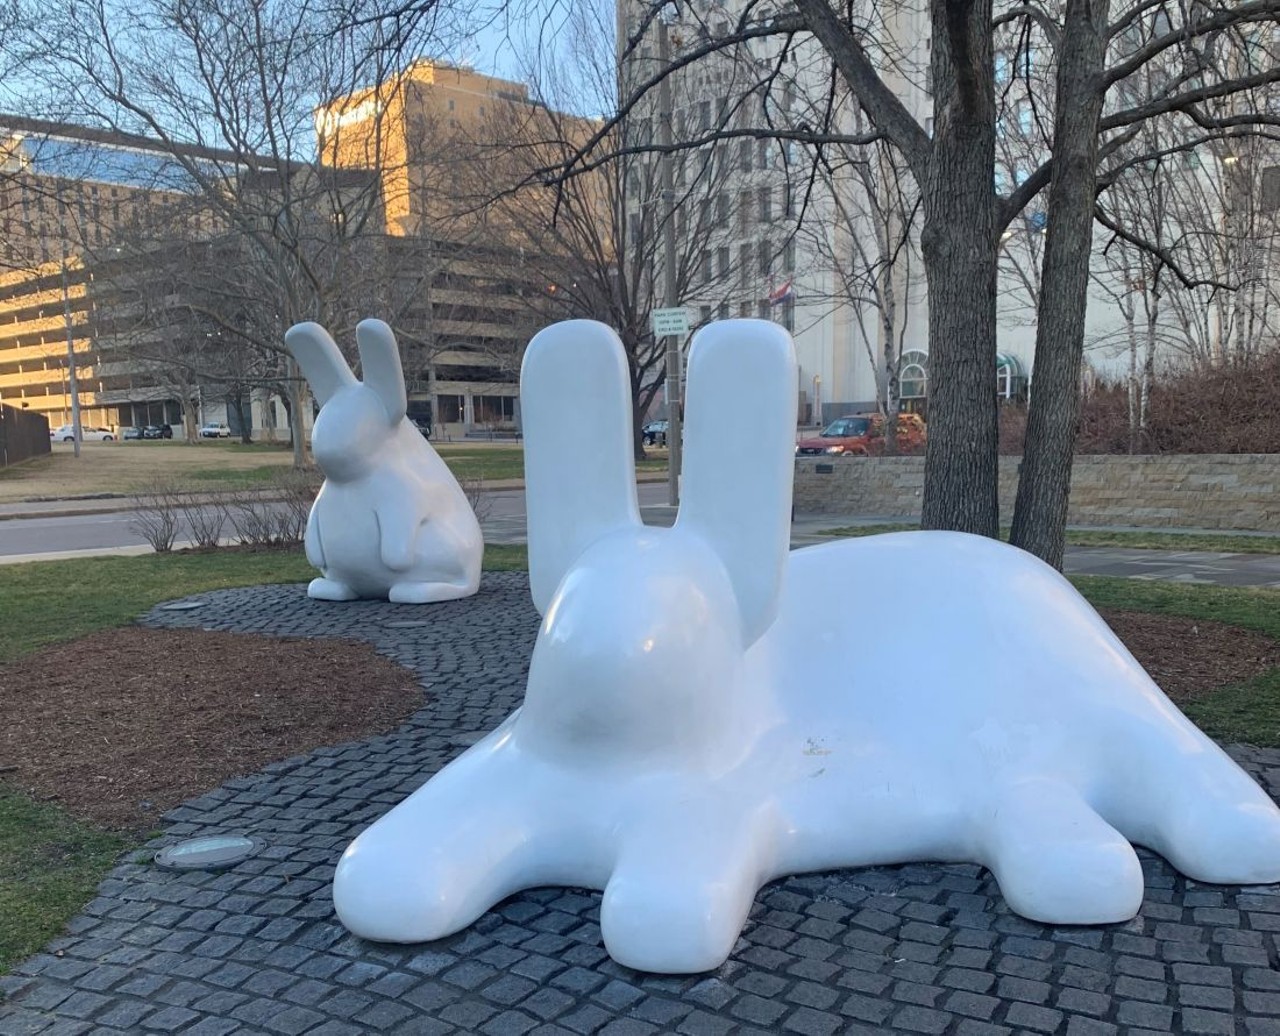 Two Rabbits (Untitled)
Citygarden Sculpture Park (801 Market Street)
Made by Dutch artist Tom Claassen
Photo credit: Riverfront Times / @riverfronttimes on Instagram: